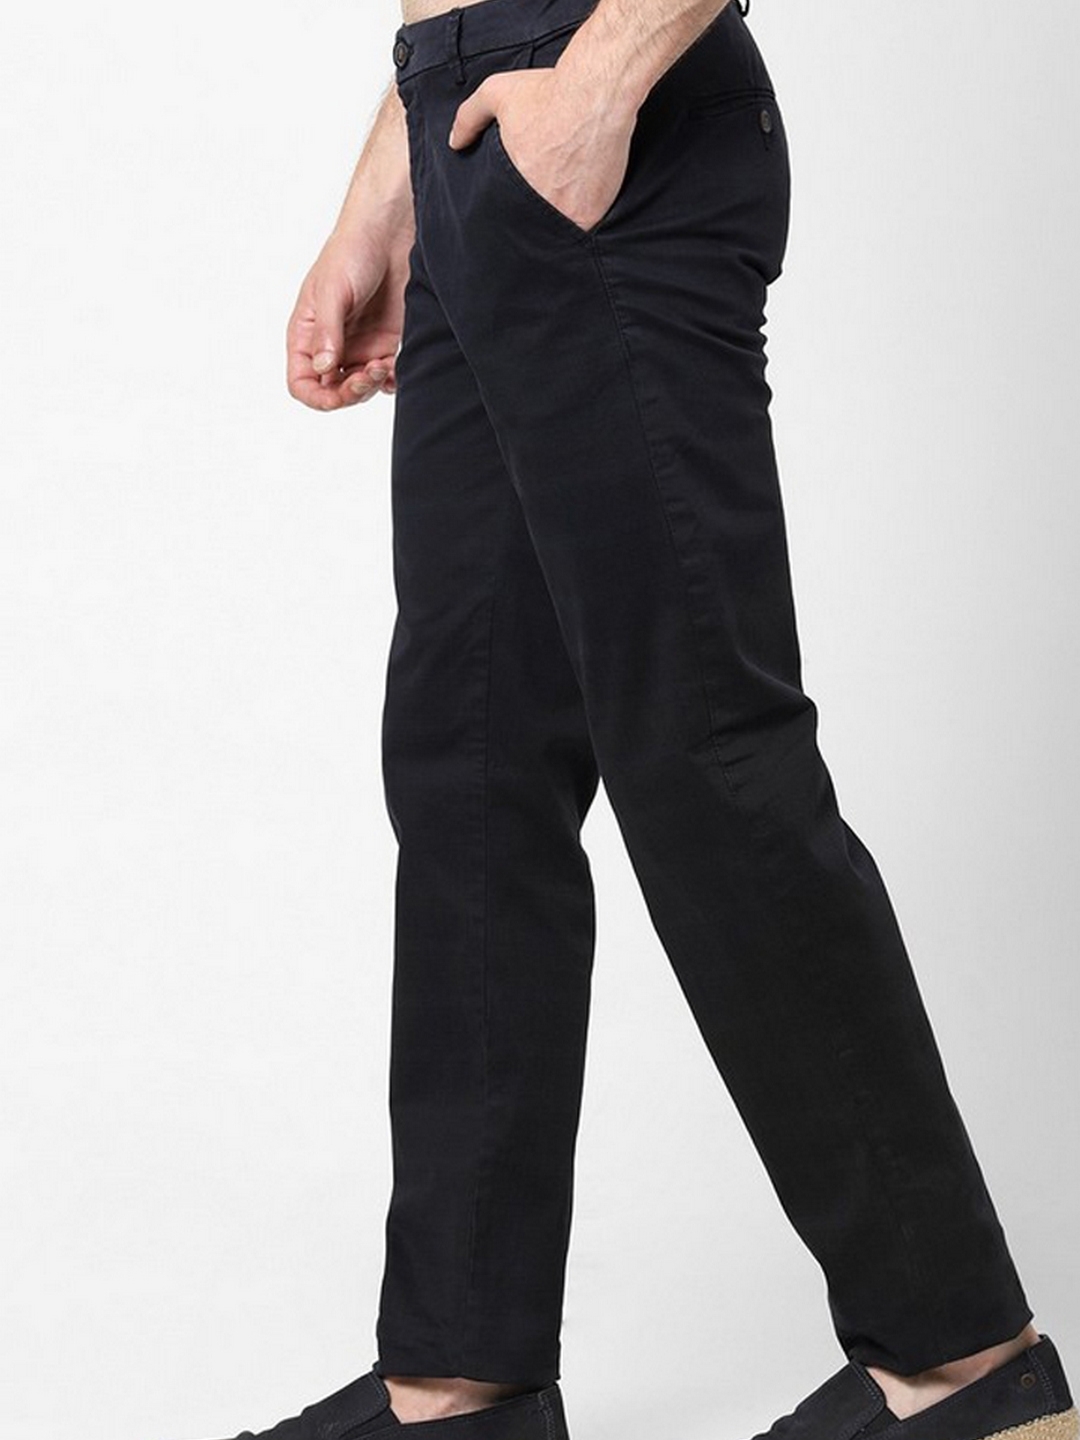 Buy Linen Club Peach Regular Fit Flat Front Trousers for Mens Online   Tata CLiQ